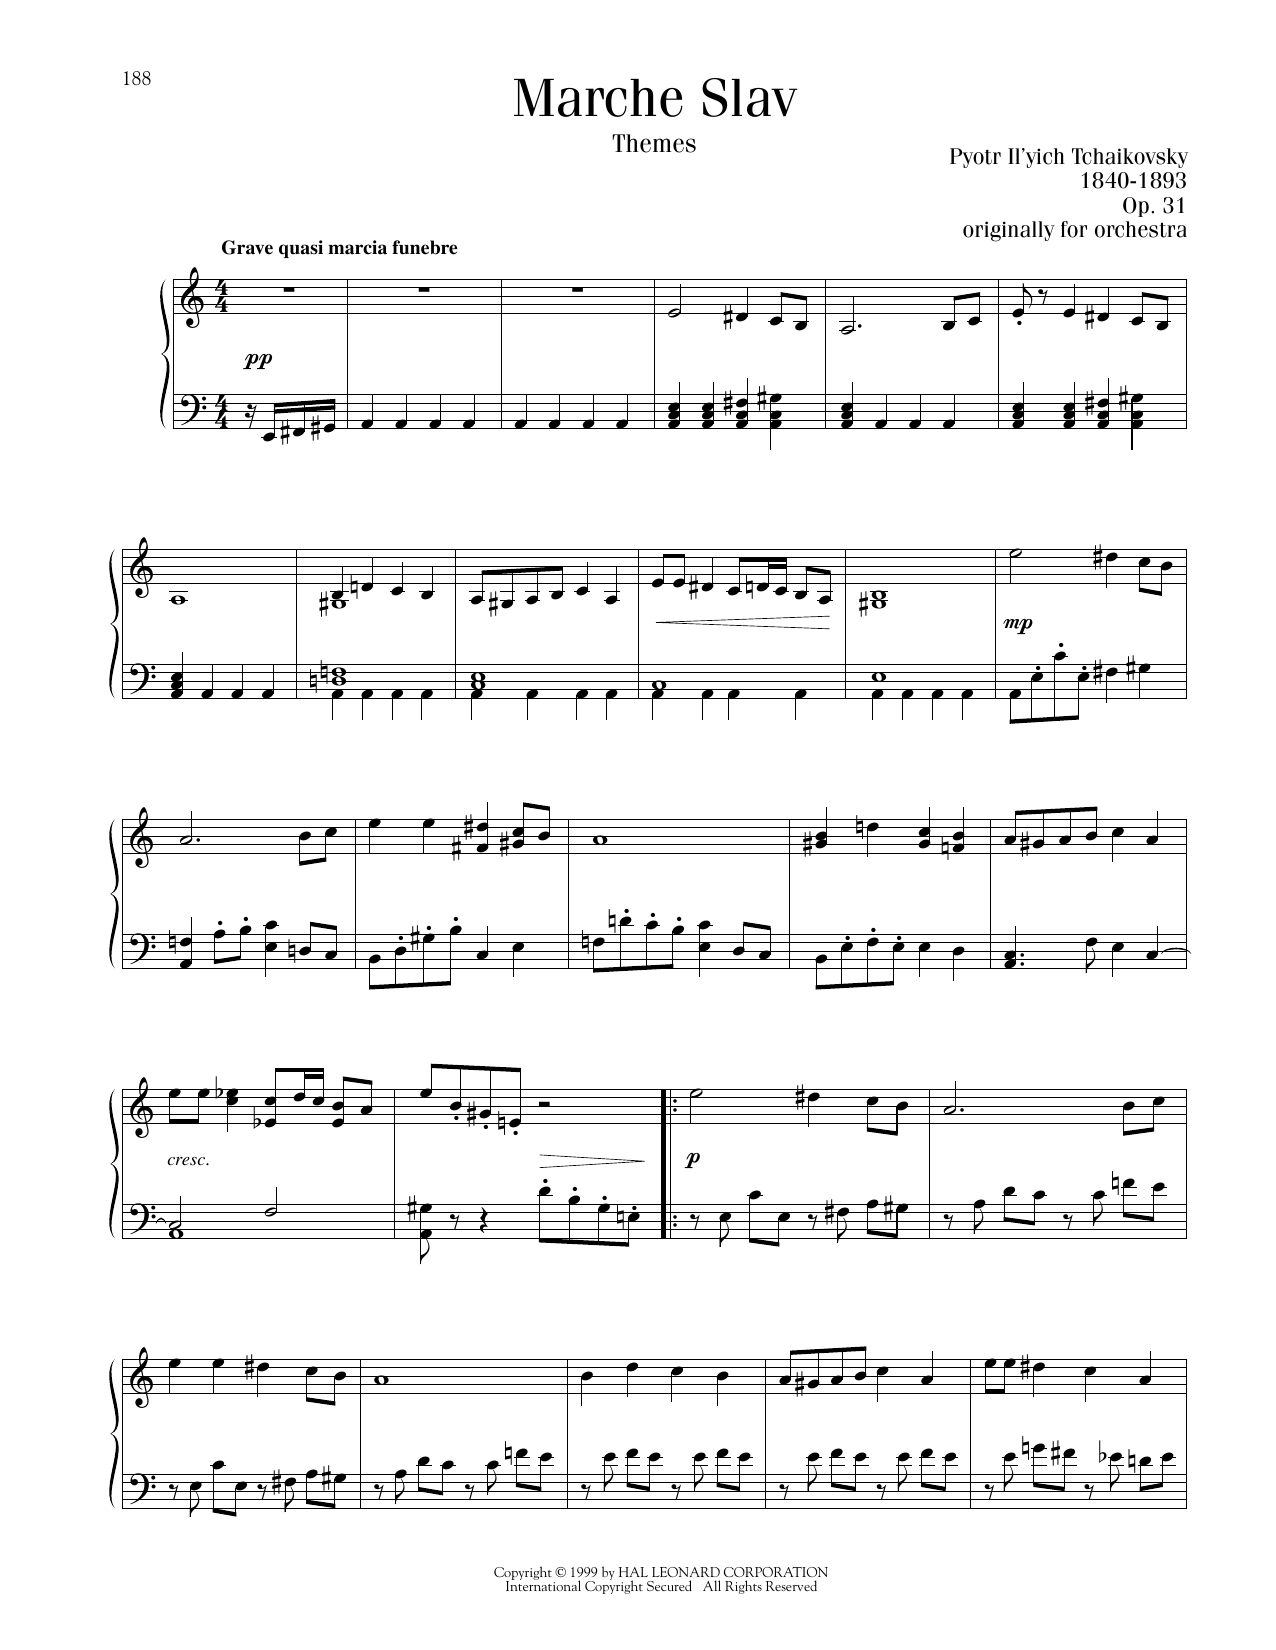 Pyotr Il'yich Tchaikovsky Marche Slav, Op. 31 sheet music notes printable PDF score